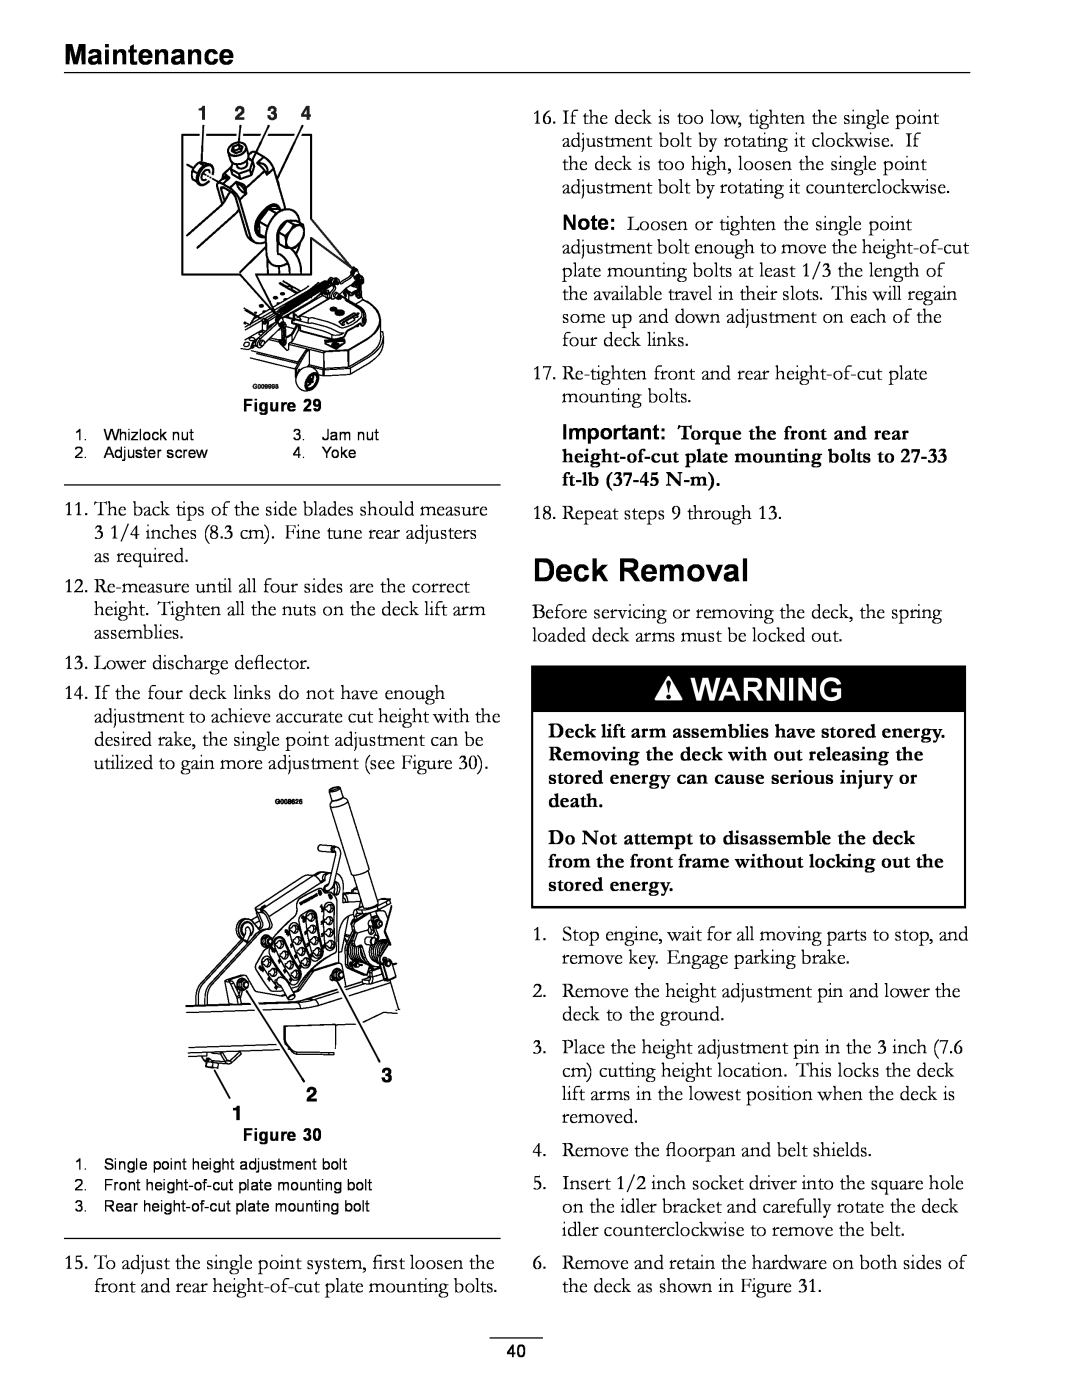 Exmark 000 & higher manual Deck Removal, Maintenance 